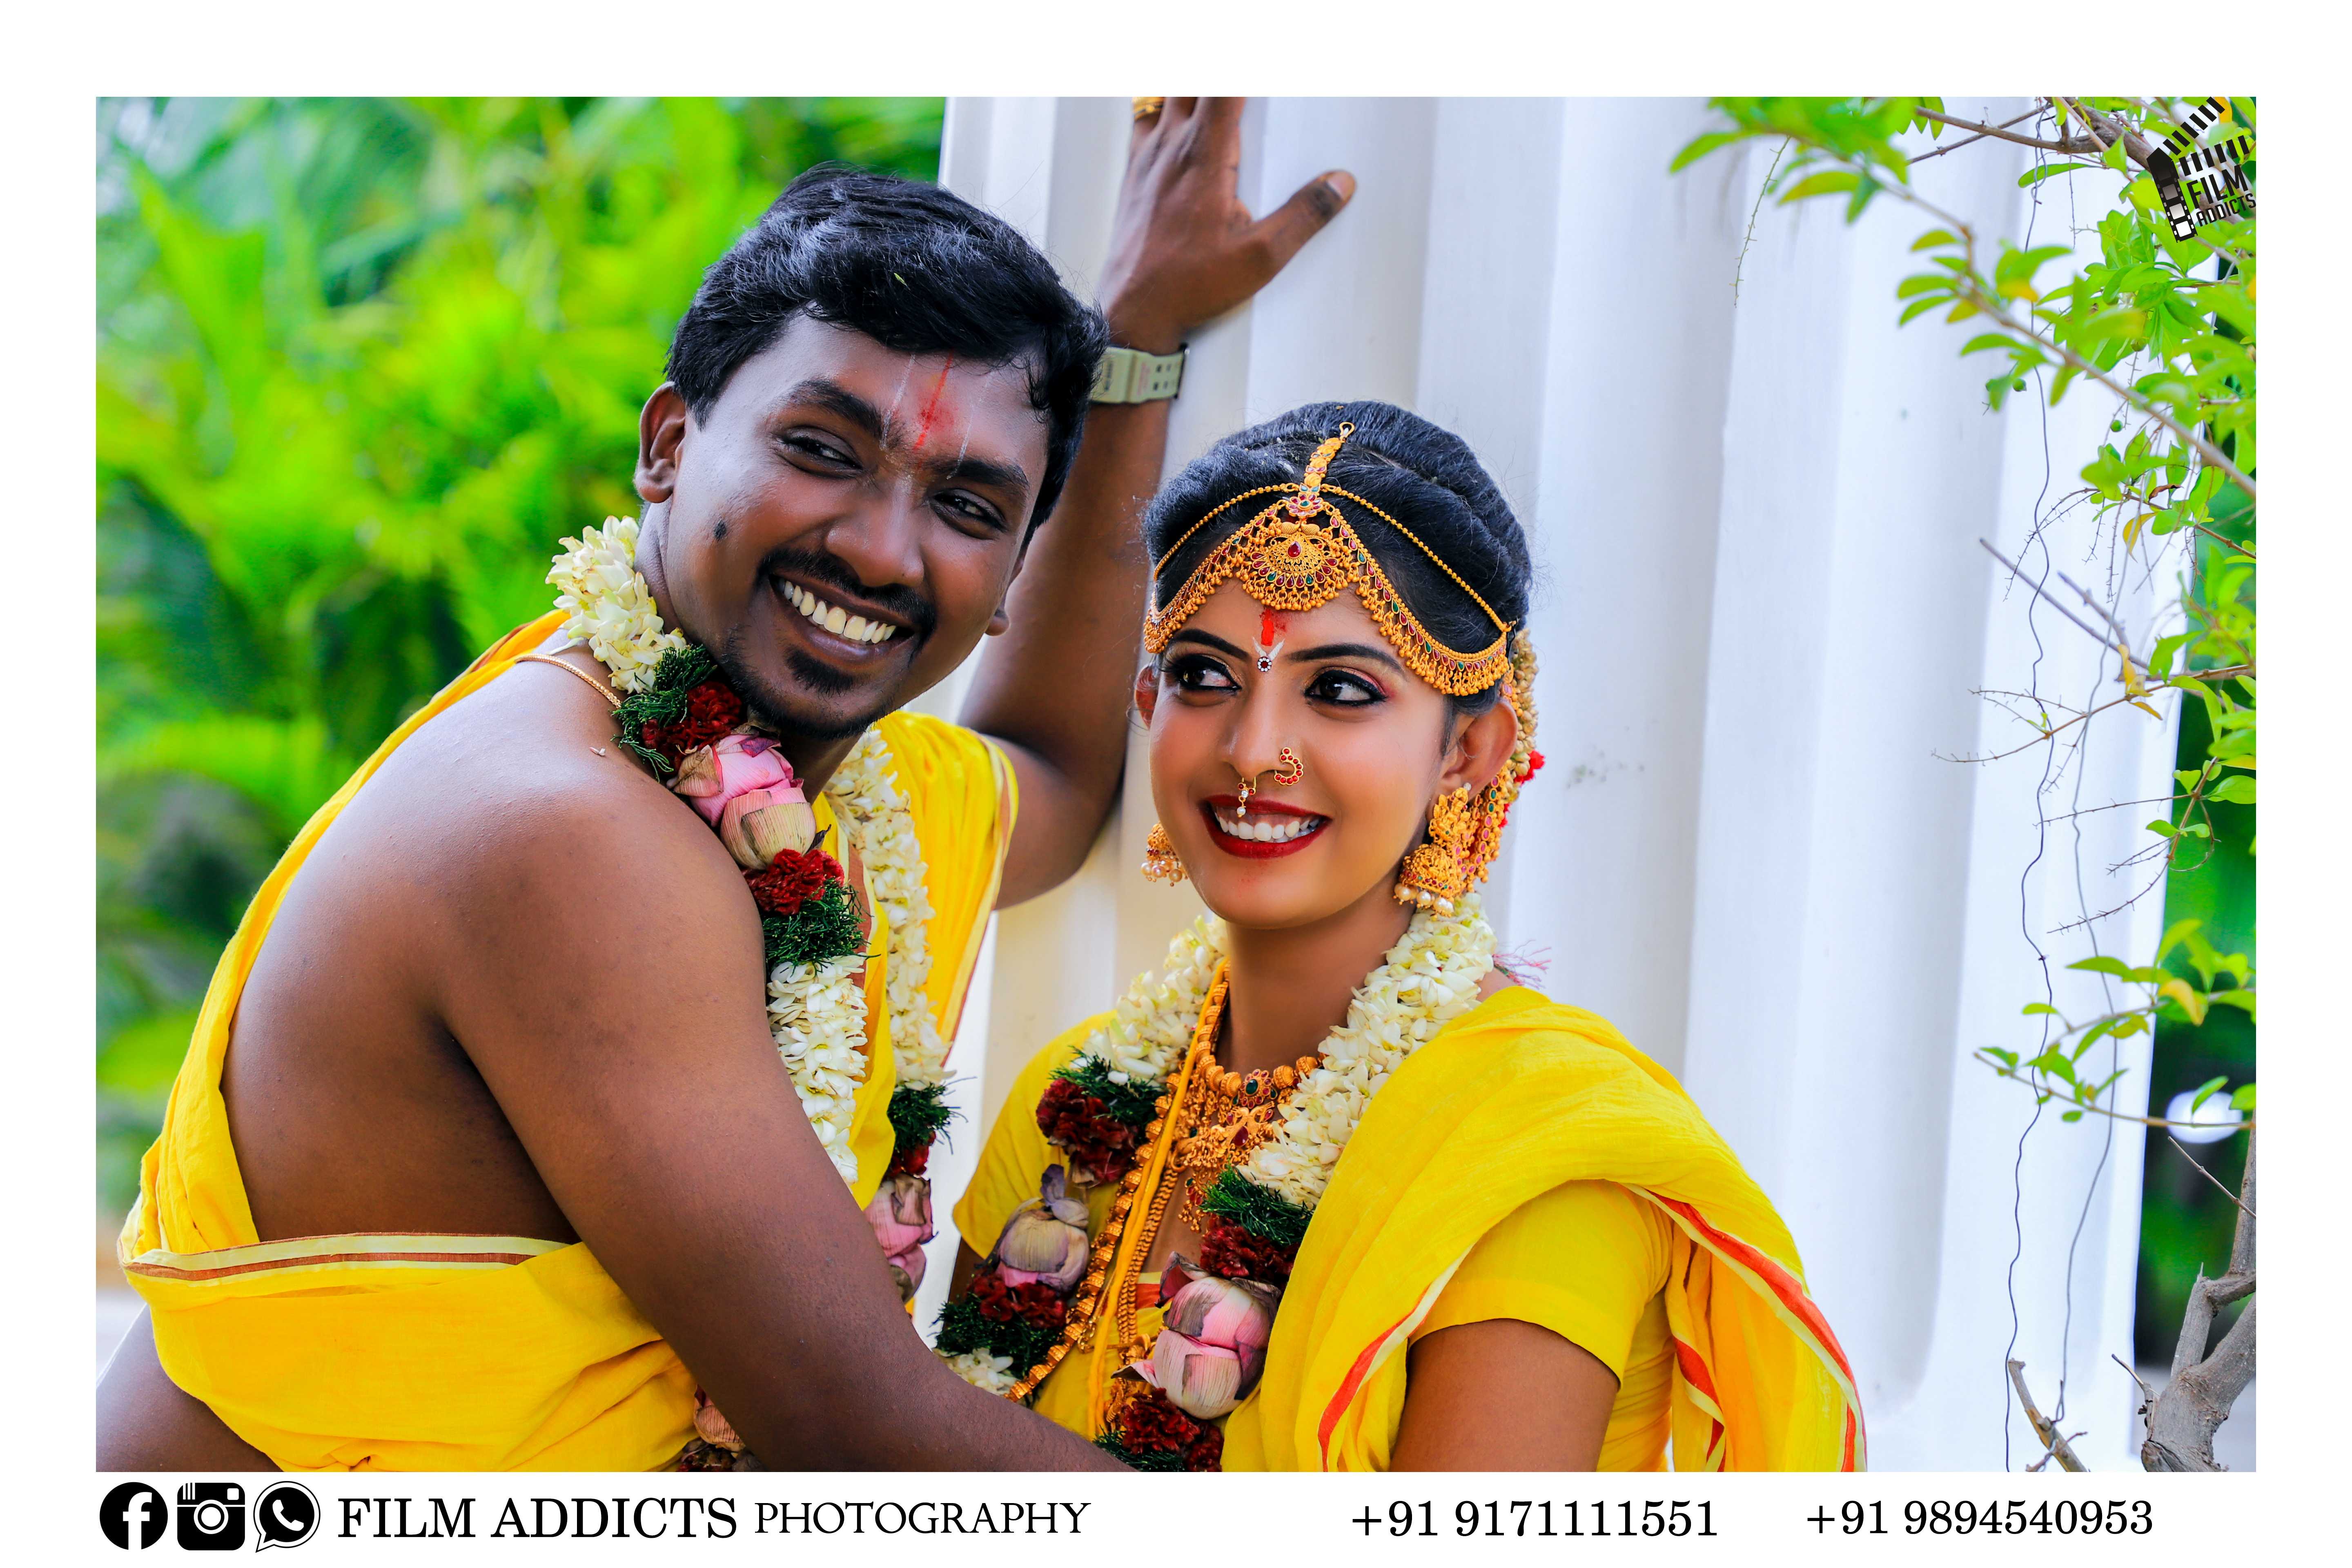 Sai-wedding photographer | SreehariPriya ❤️ Karthik . . . Swipe left ⬅️ For  enquiries, contact 9394506111 or mail us at saiphotography.111@gmail.com .  . .... | Instagram